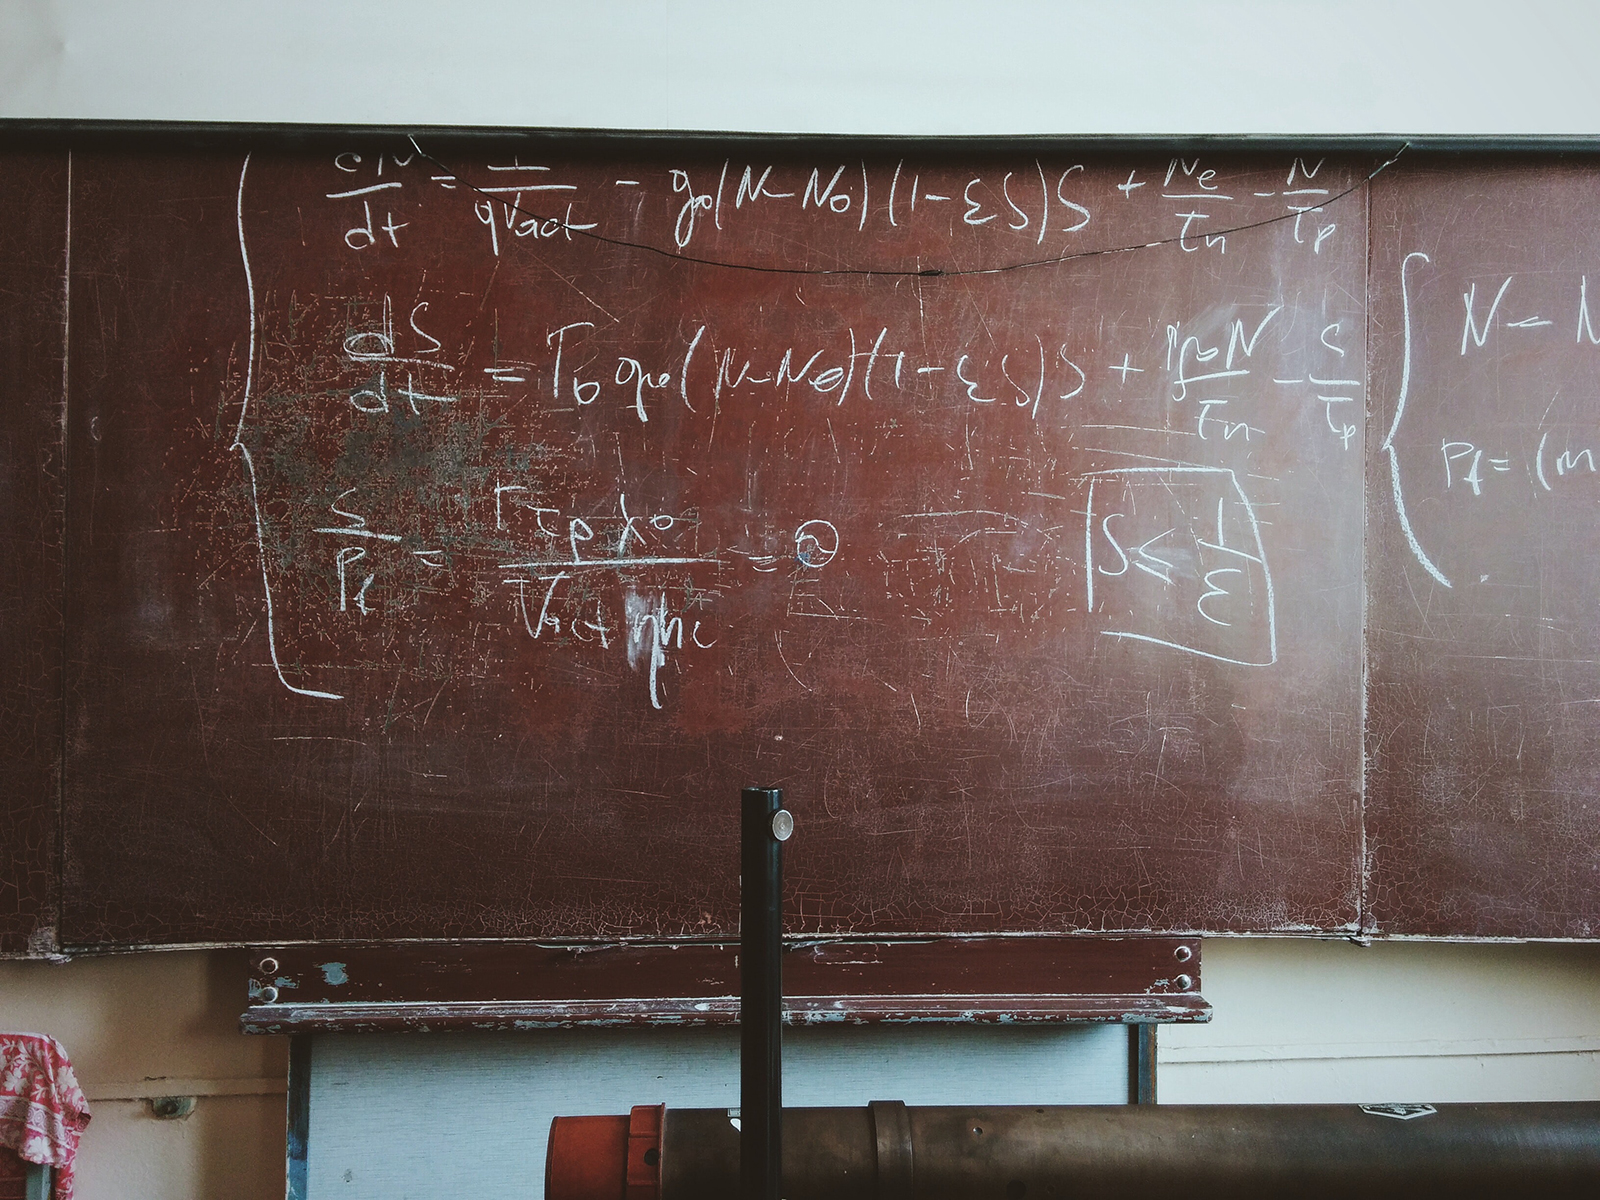 An equation written on a chalkboard.